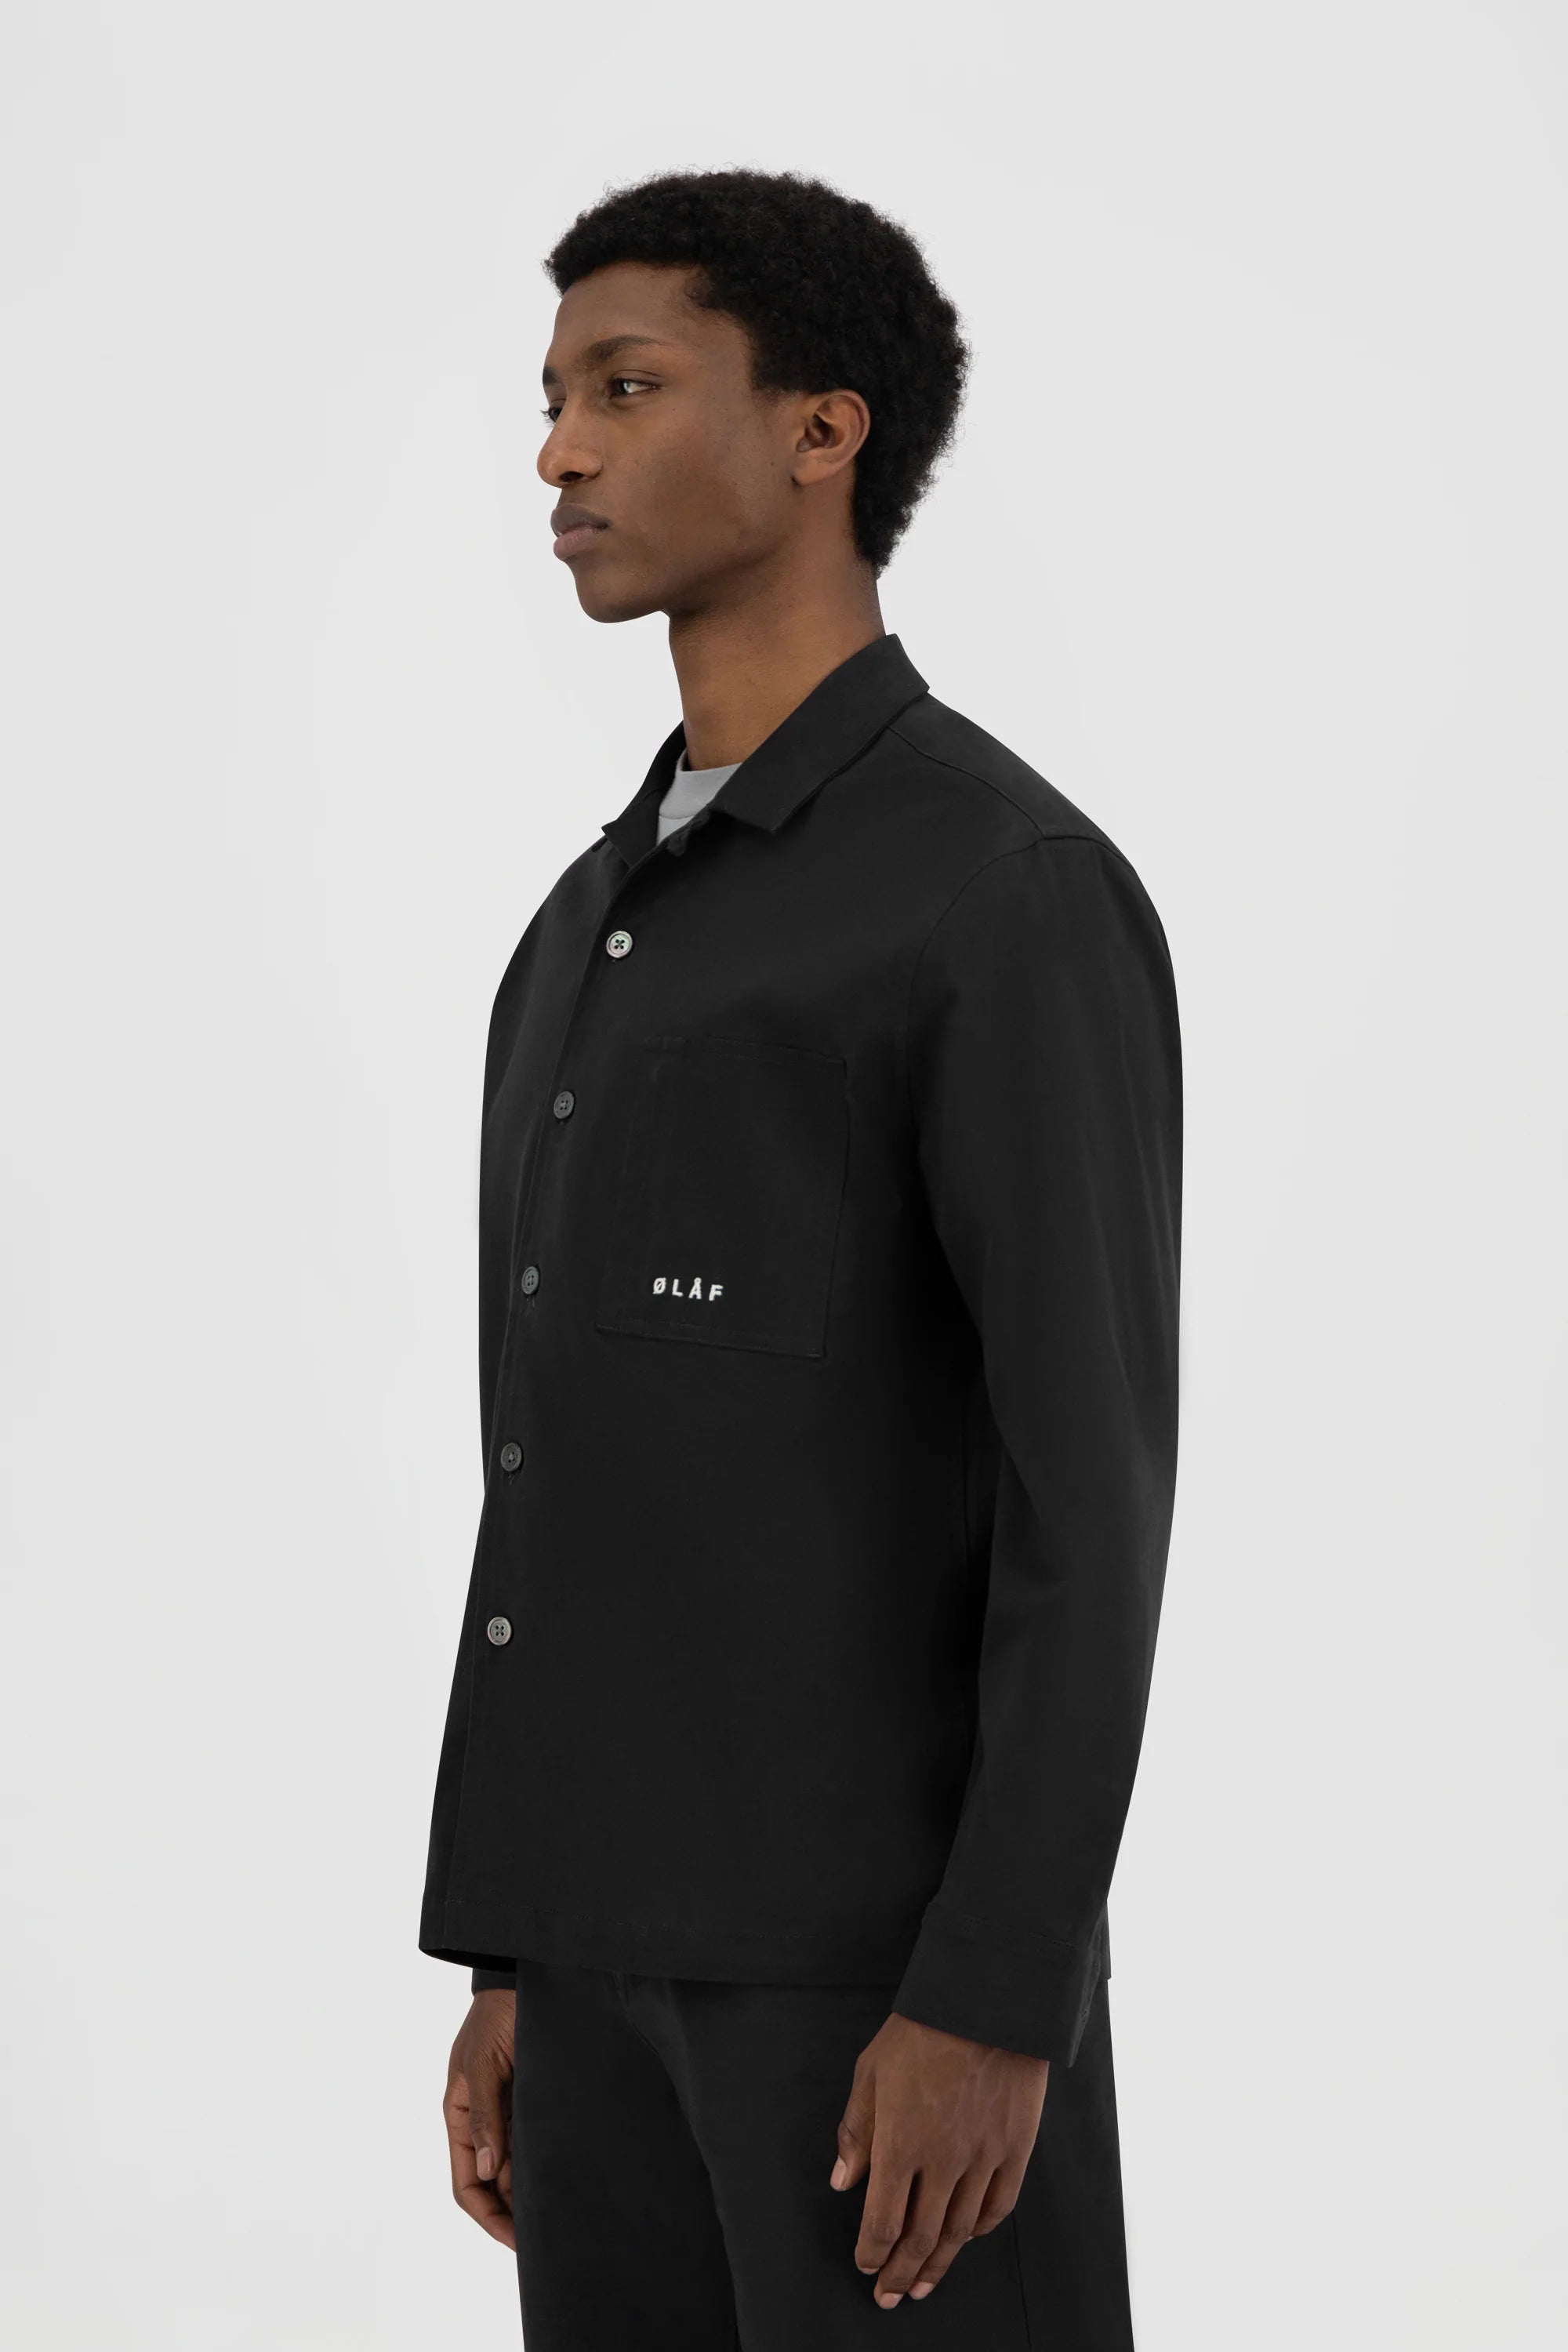 ØLÅF Zip Pocket Shirt Black